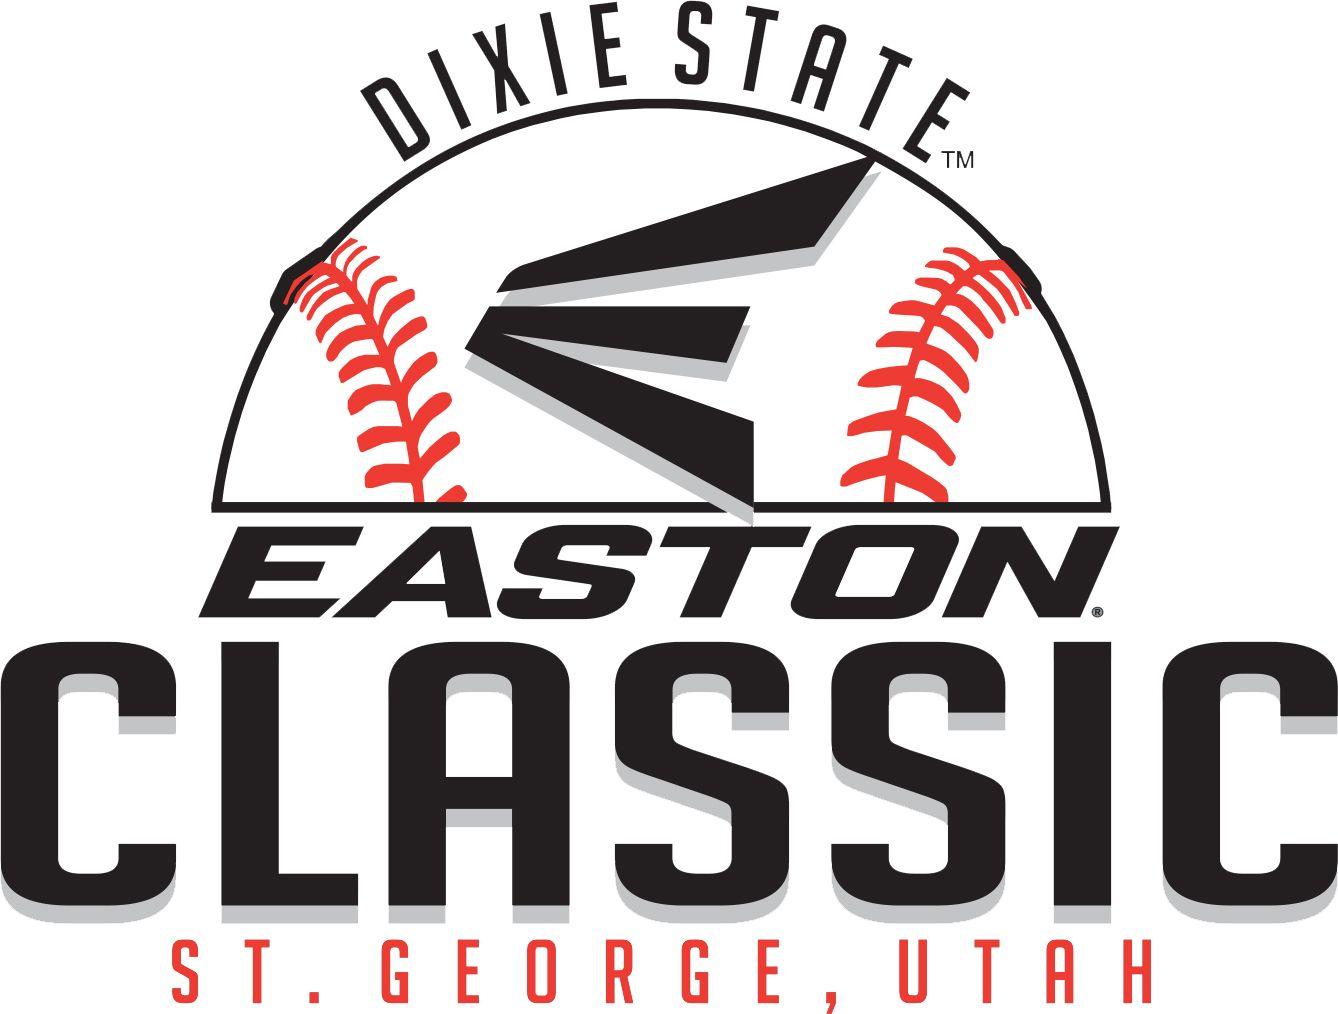 Easton Football Logo - Dixie State Softball Easton Classic (Feb. 8 11) State